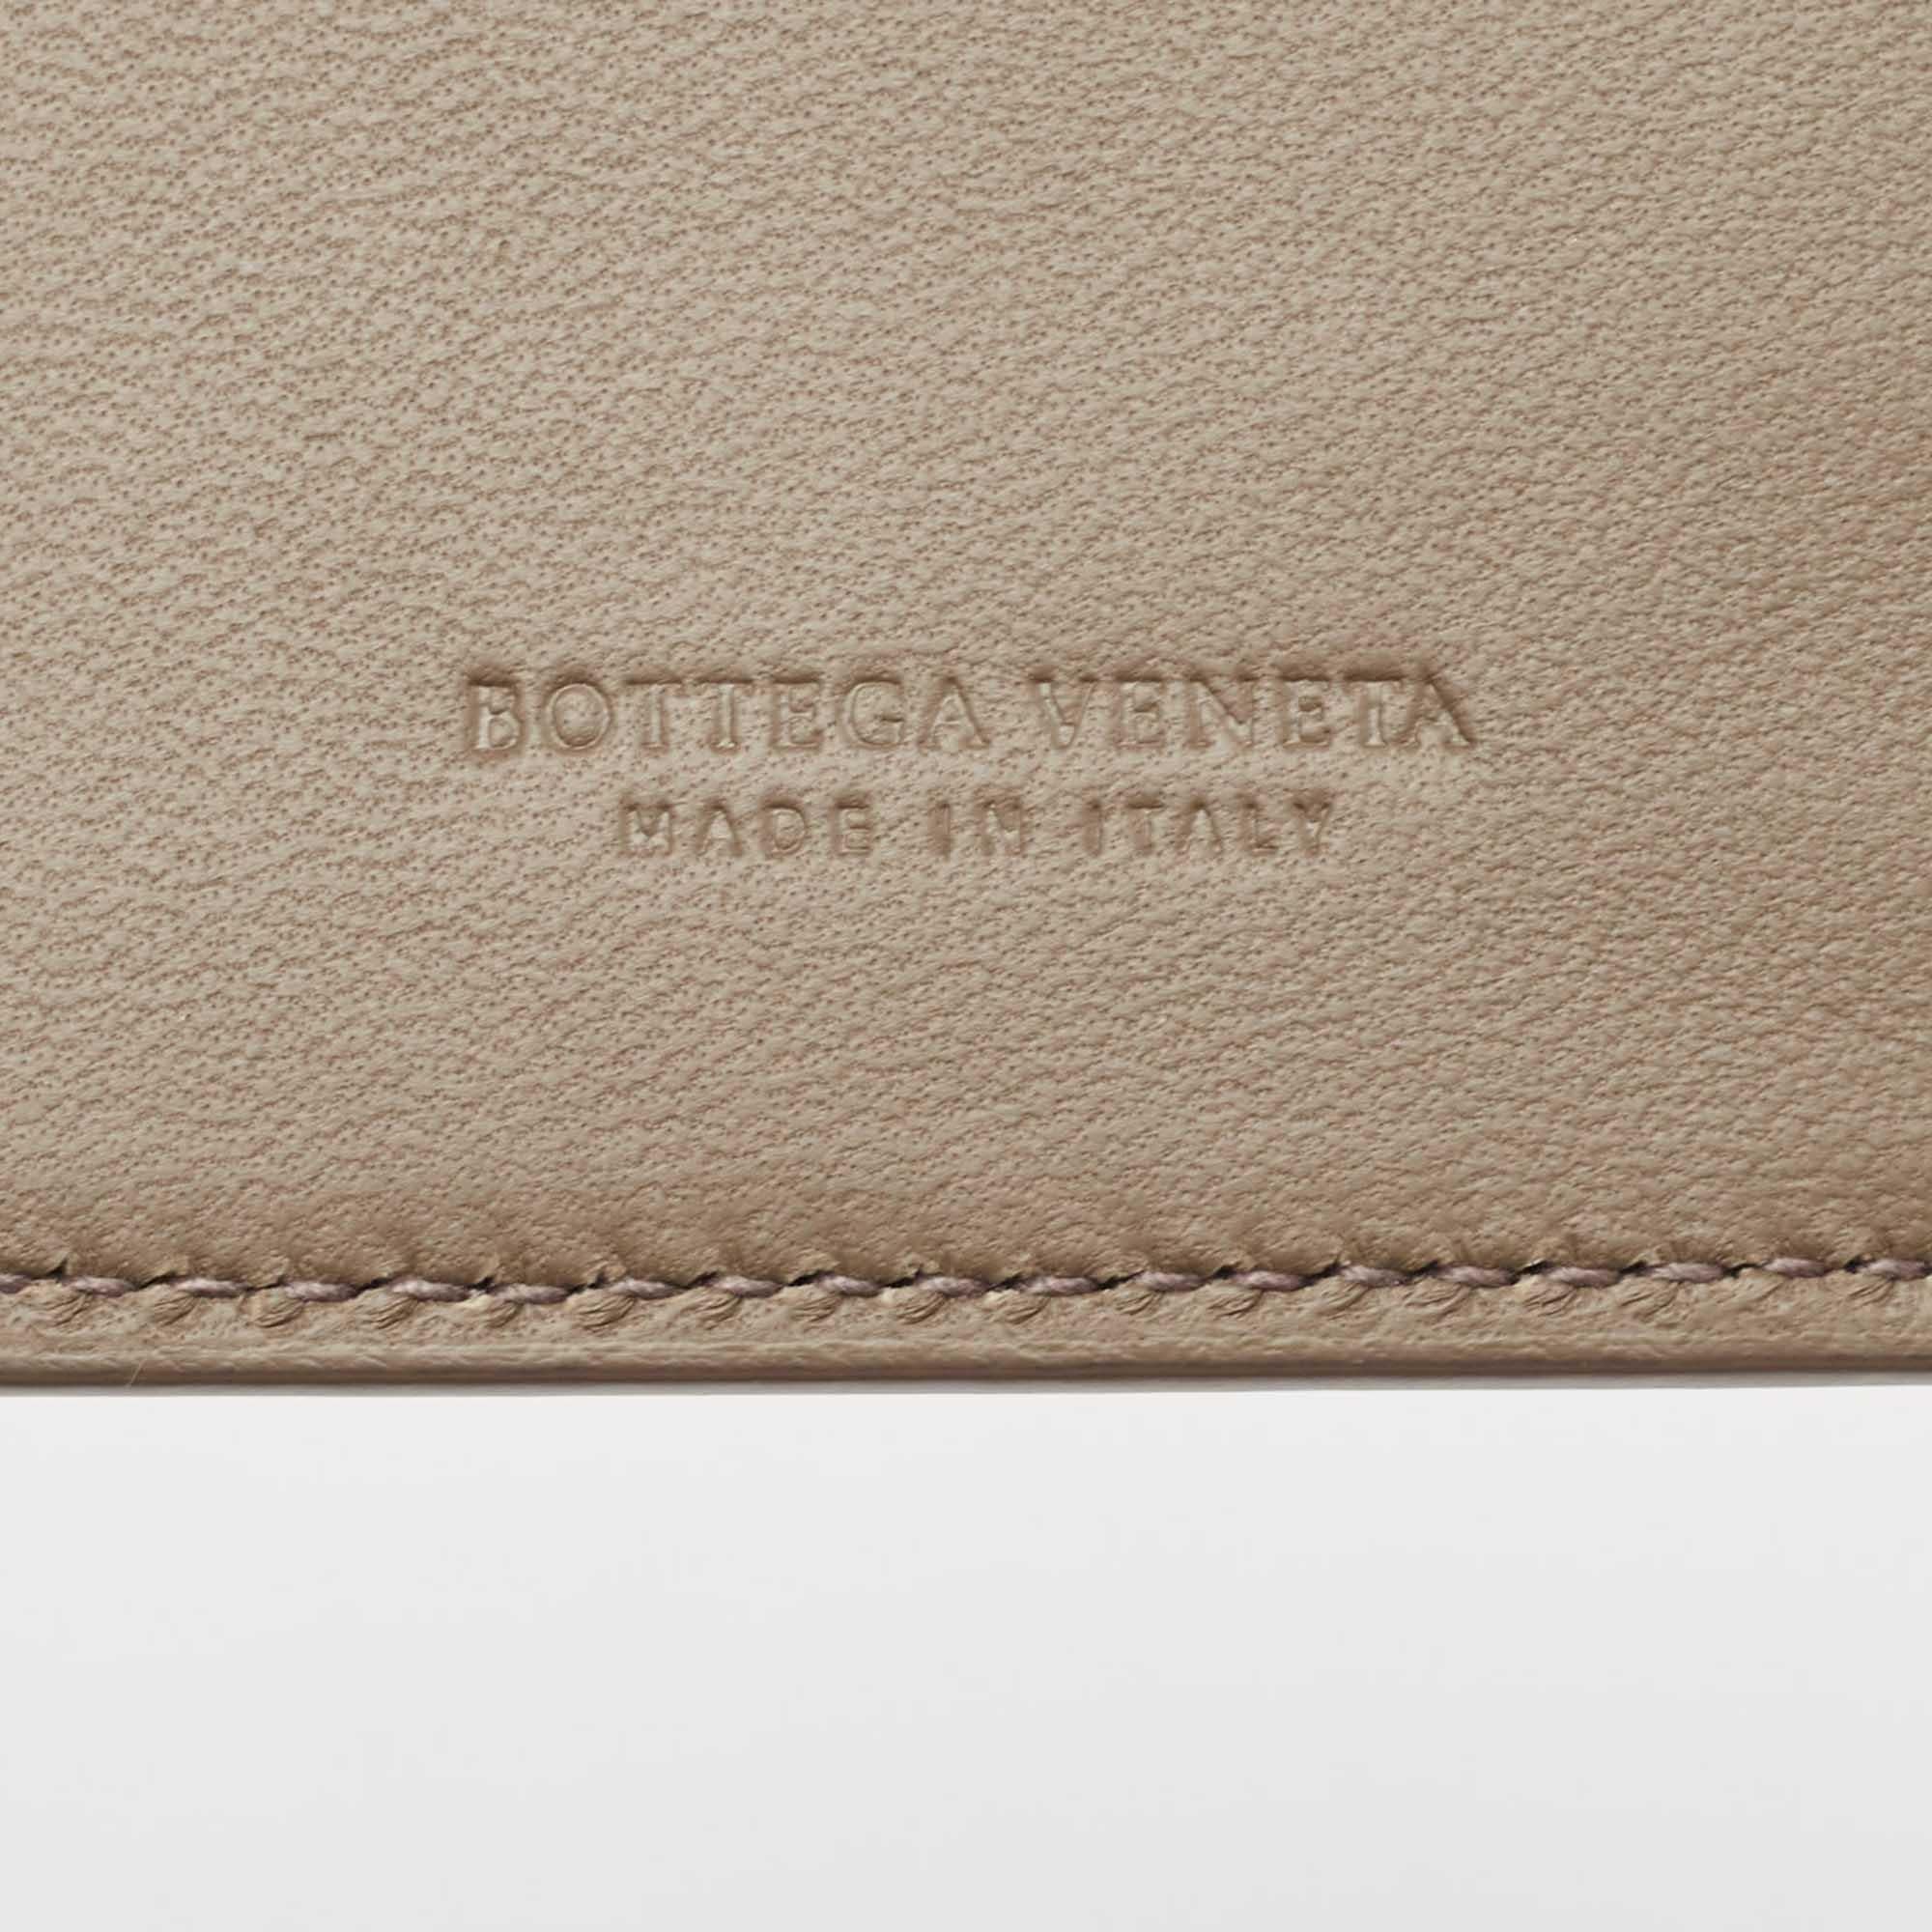 Bottega Veneta Brown/Yellow Intrecciato Leather Bifold Card Case 8